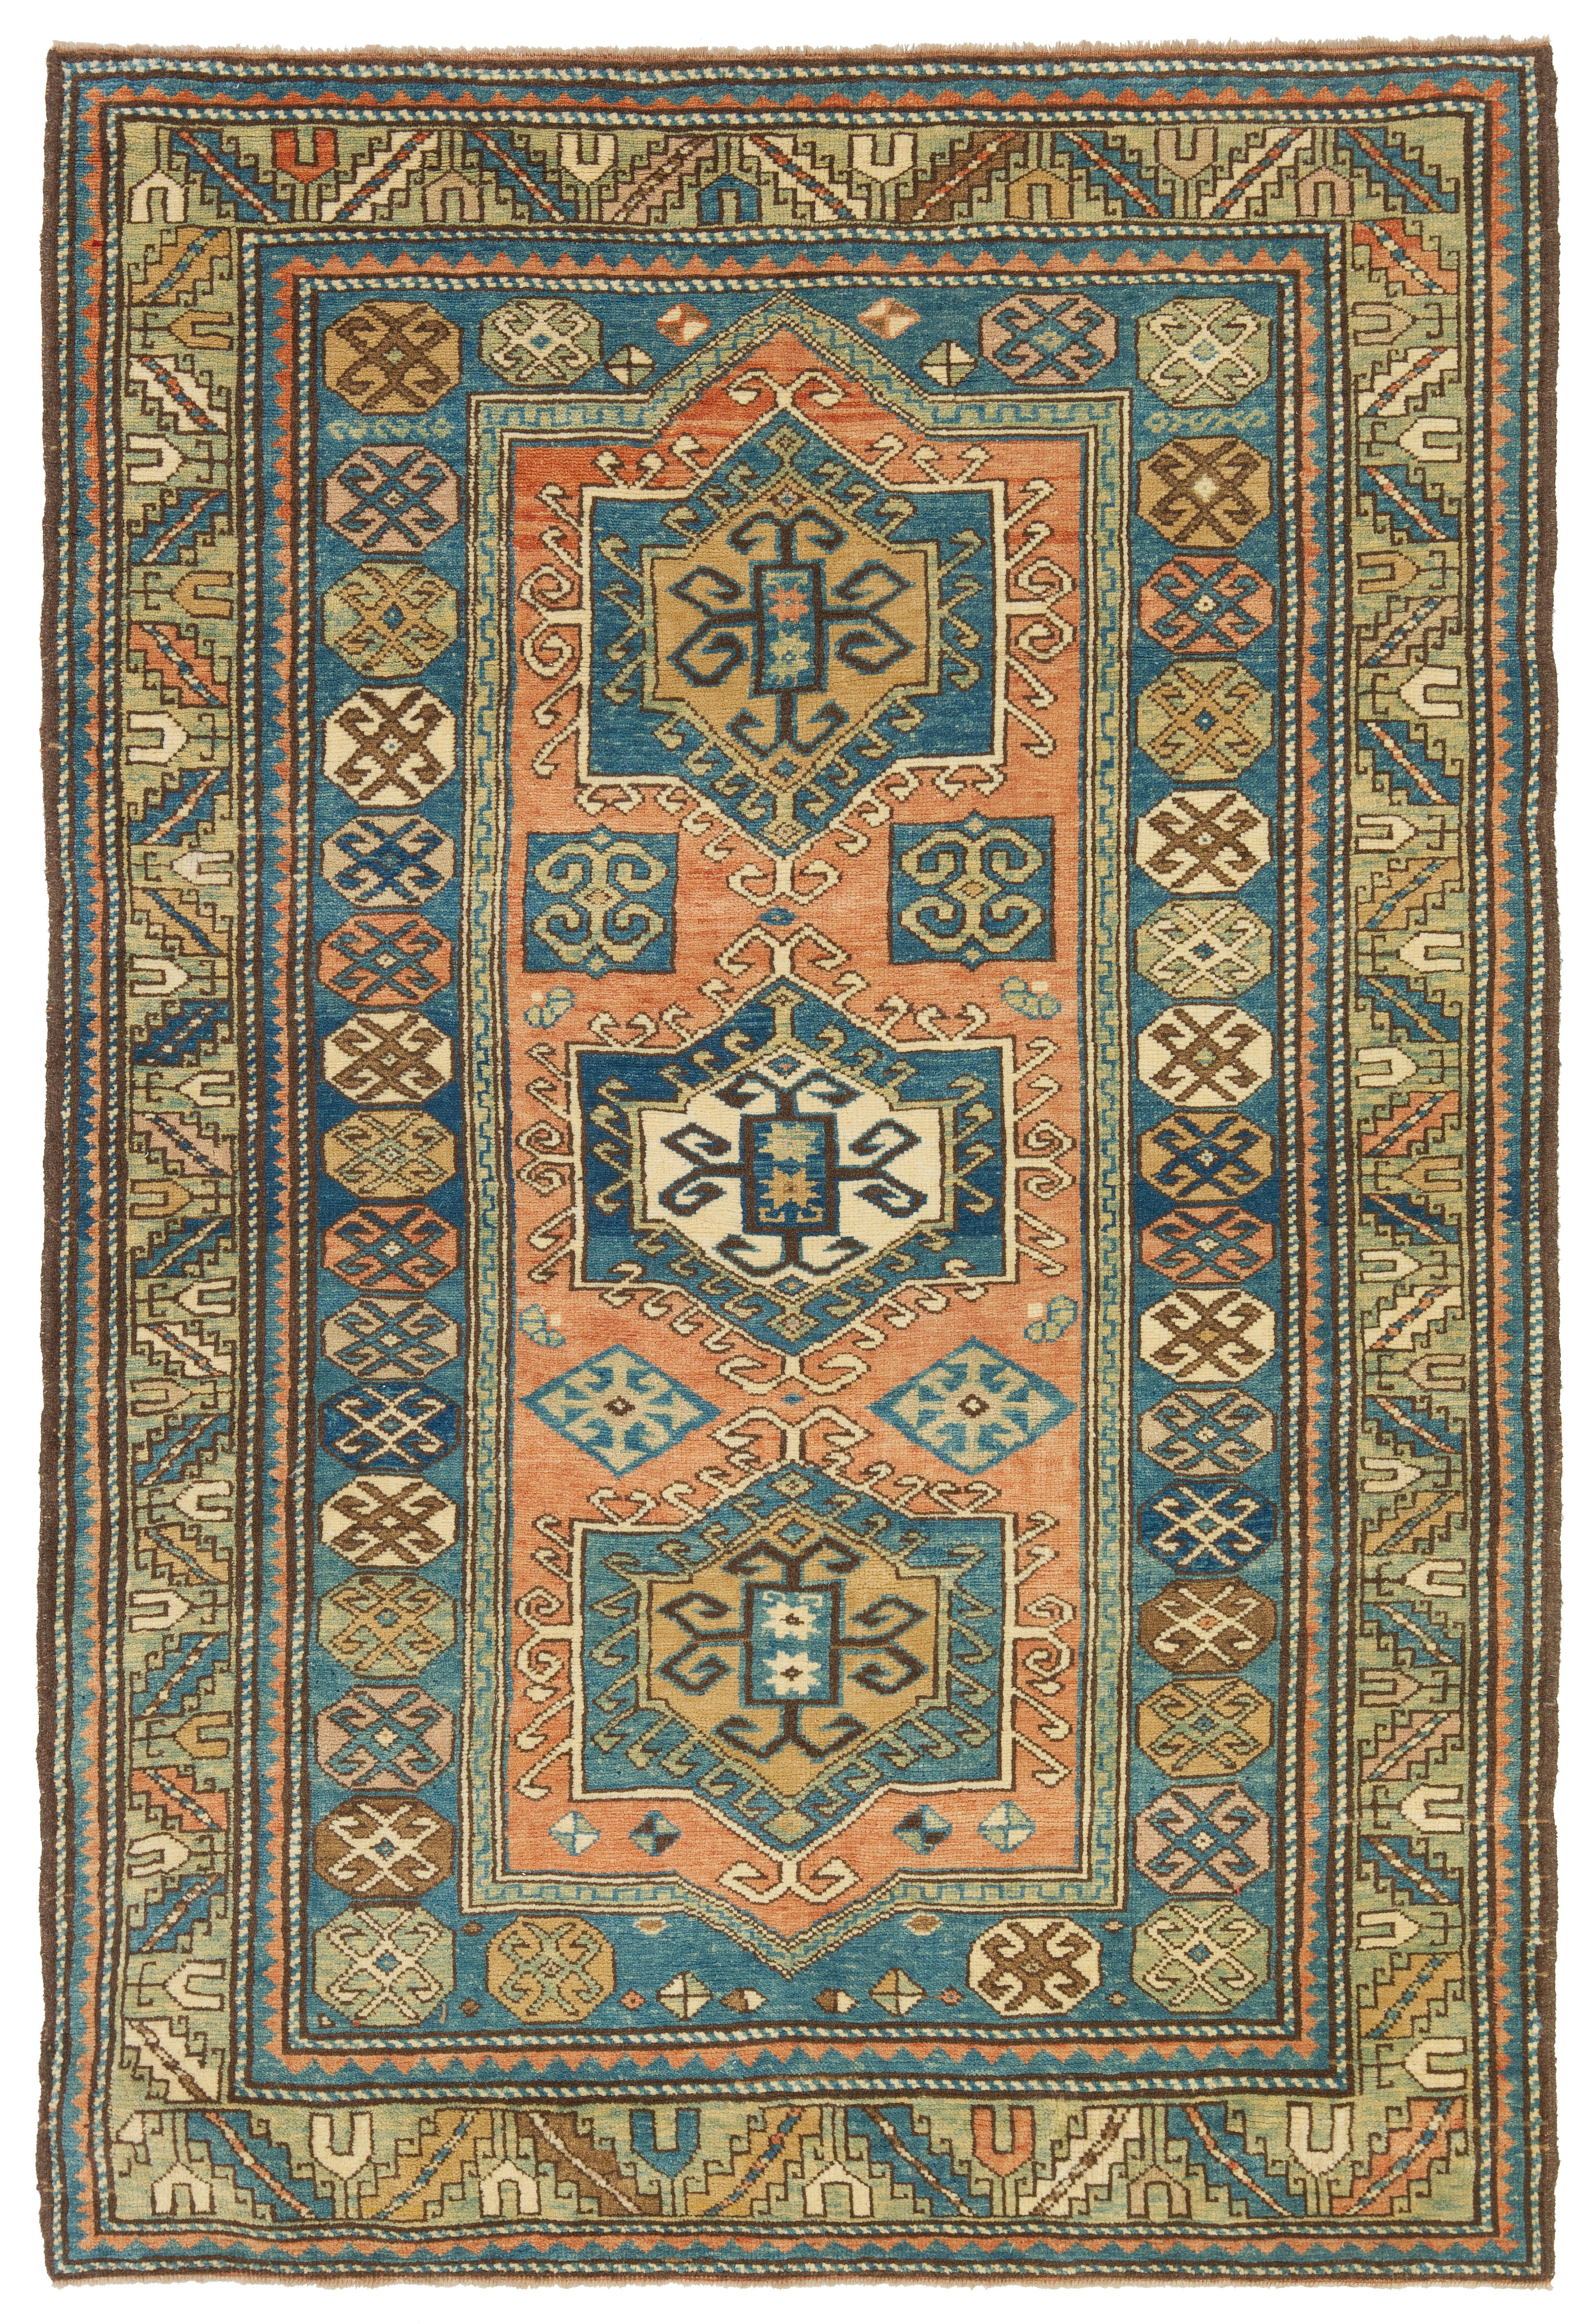 Ararat Rugs Fachralo Kazak Rug 19th Century Caucasus Revival Carpet Natural Dyed For Sale